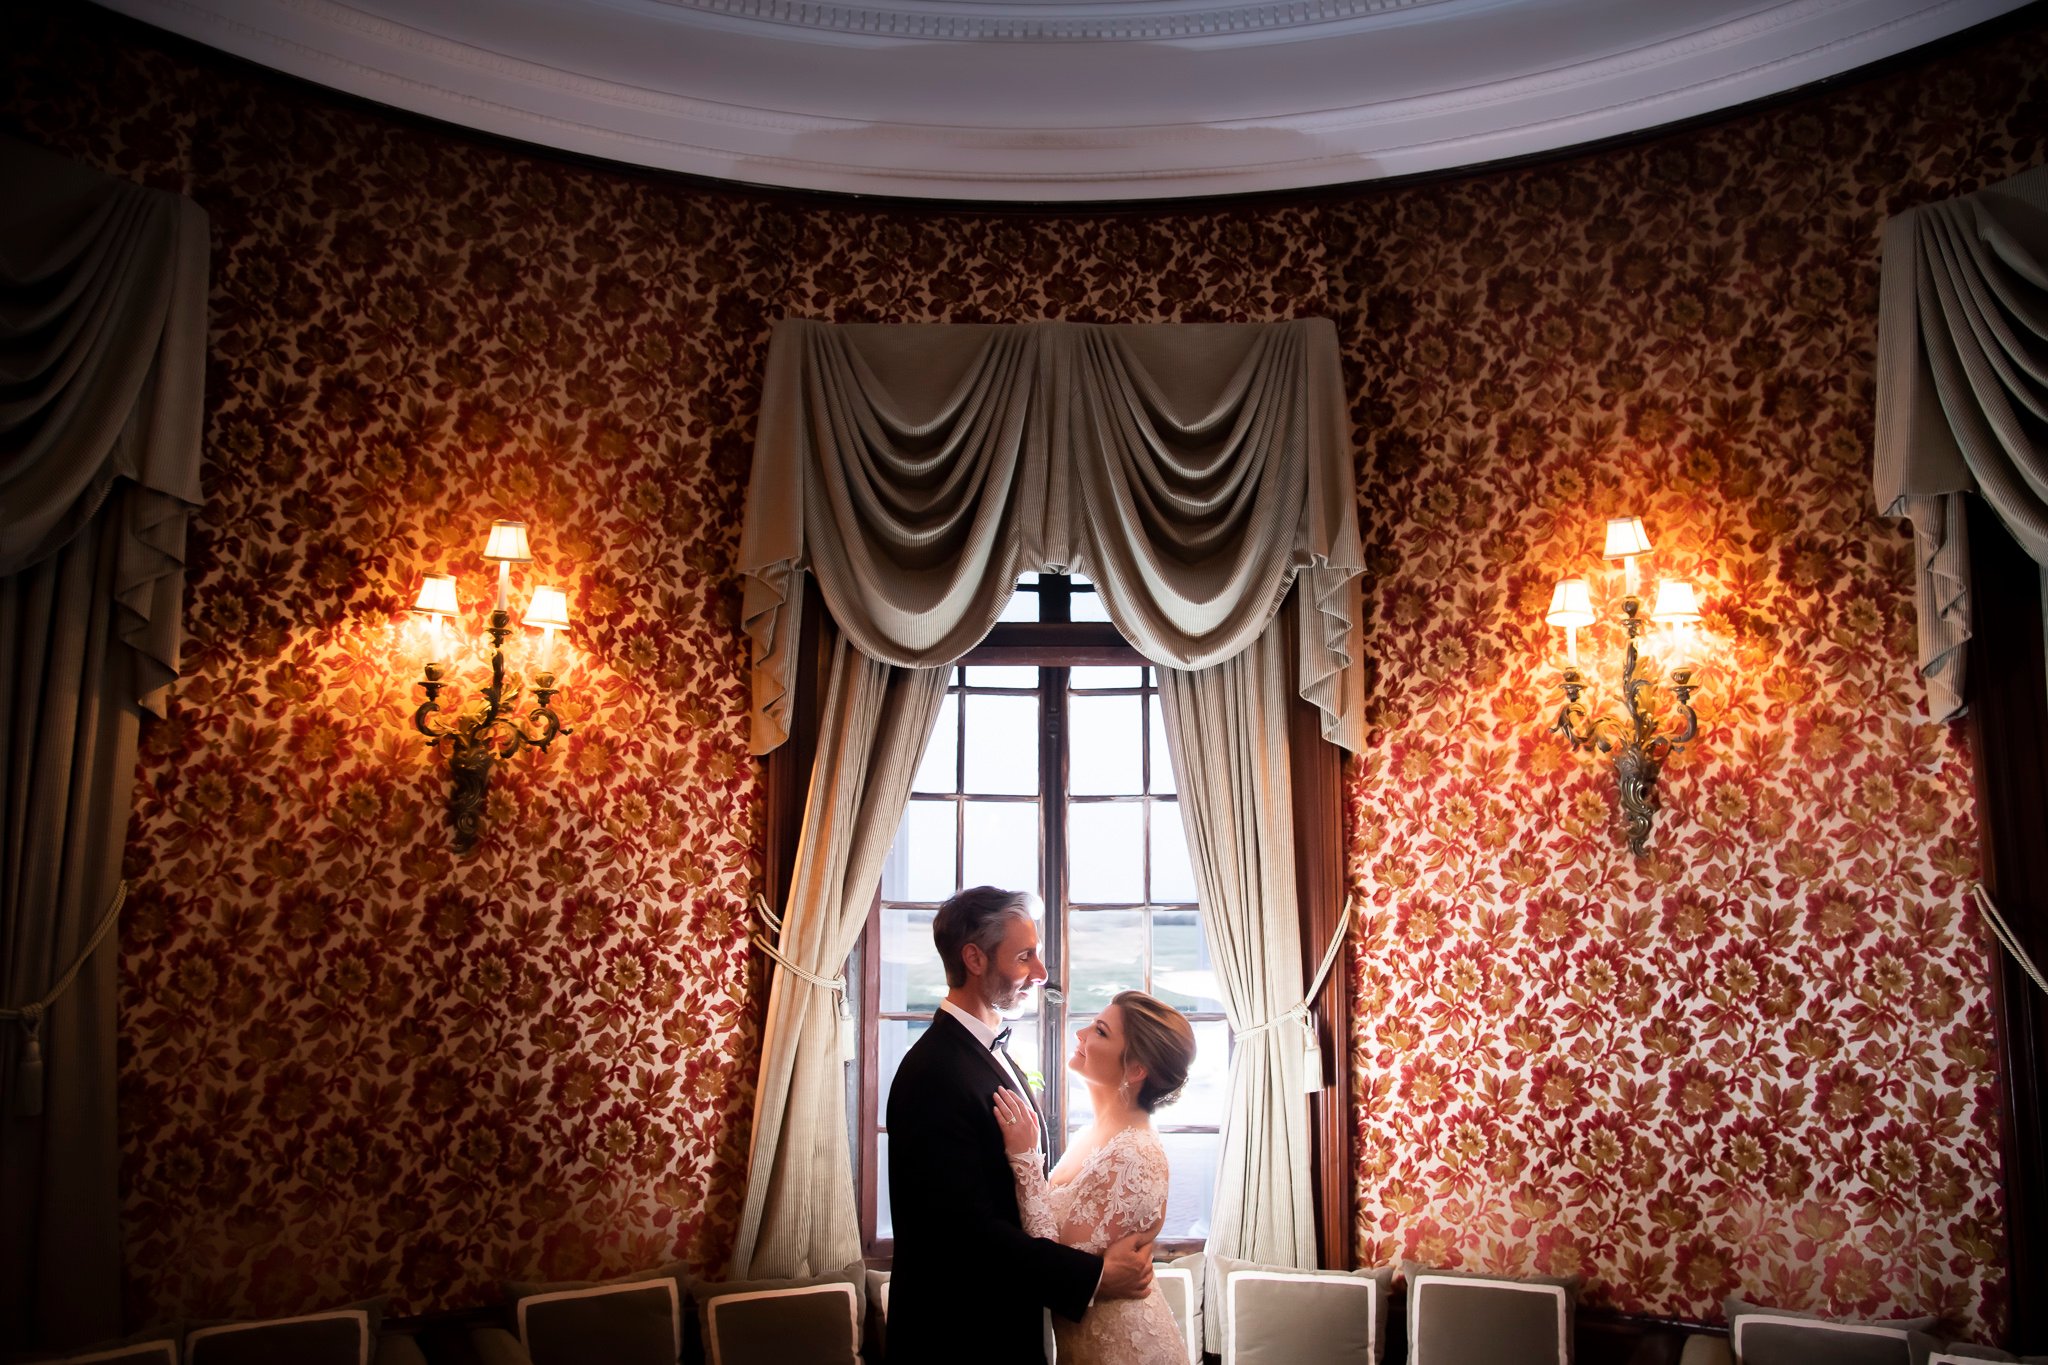 Bourne Mansion - Real Wedding Photos